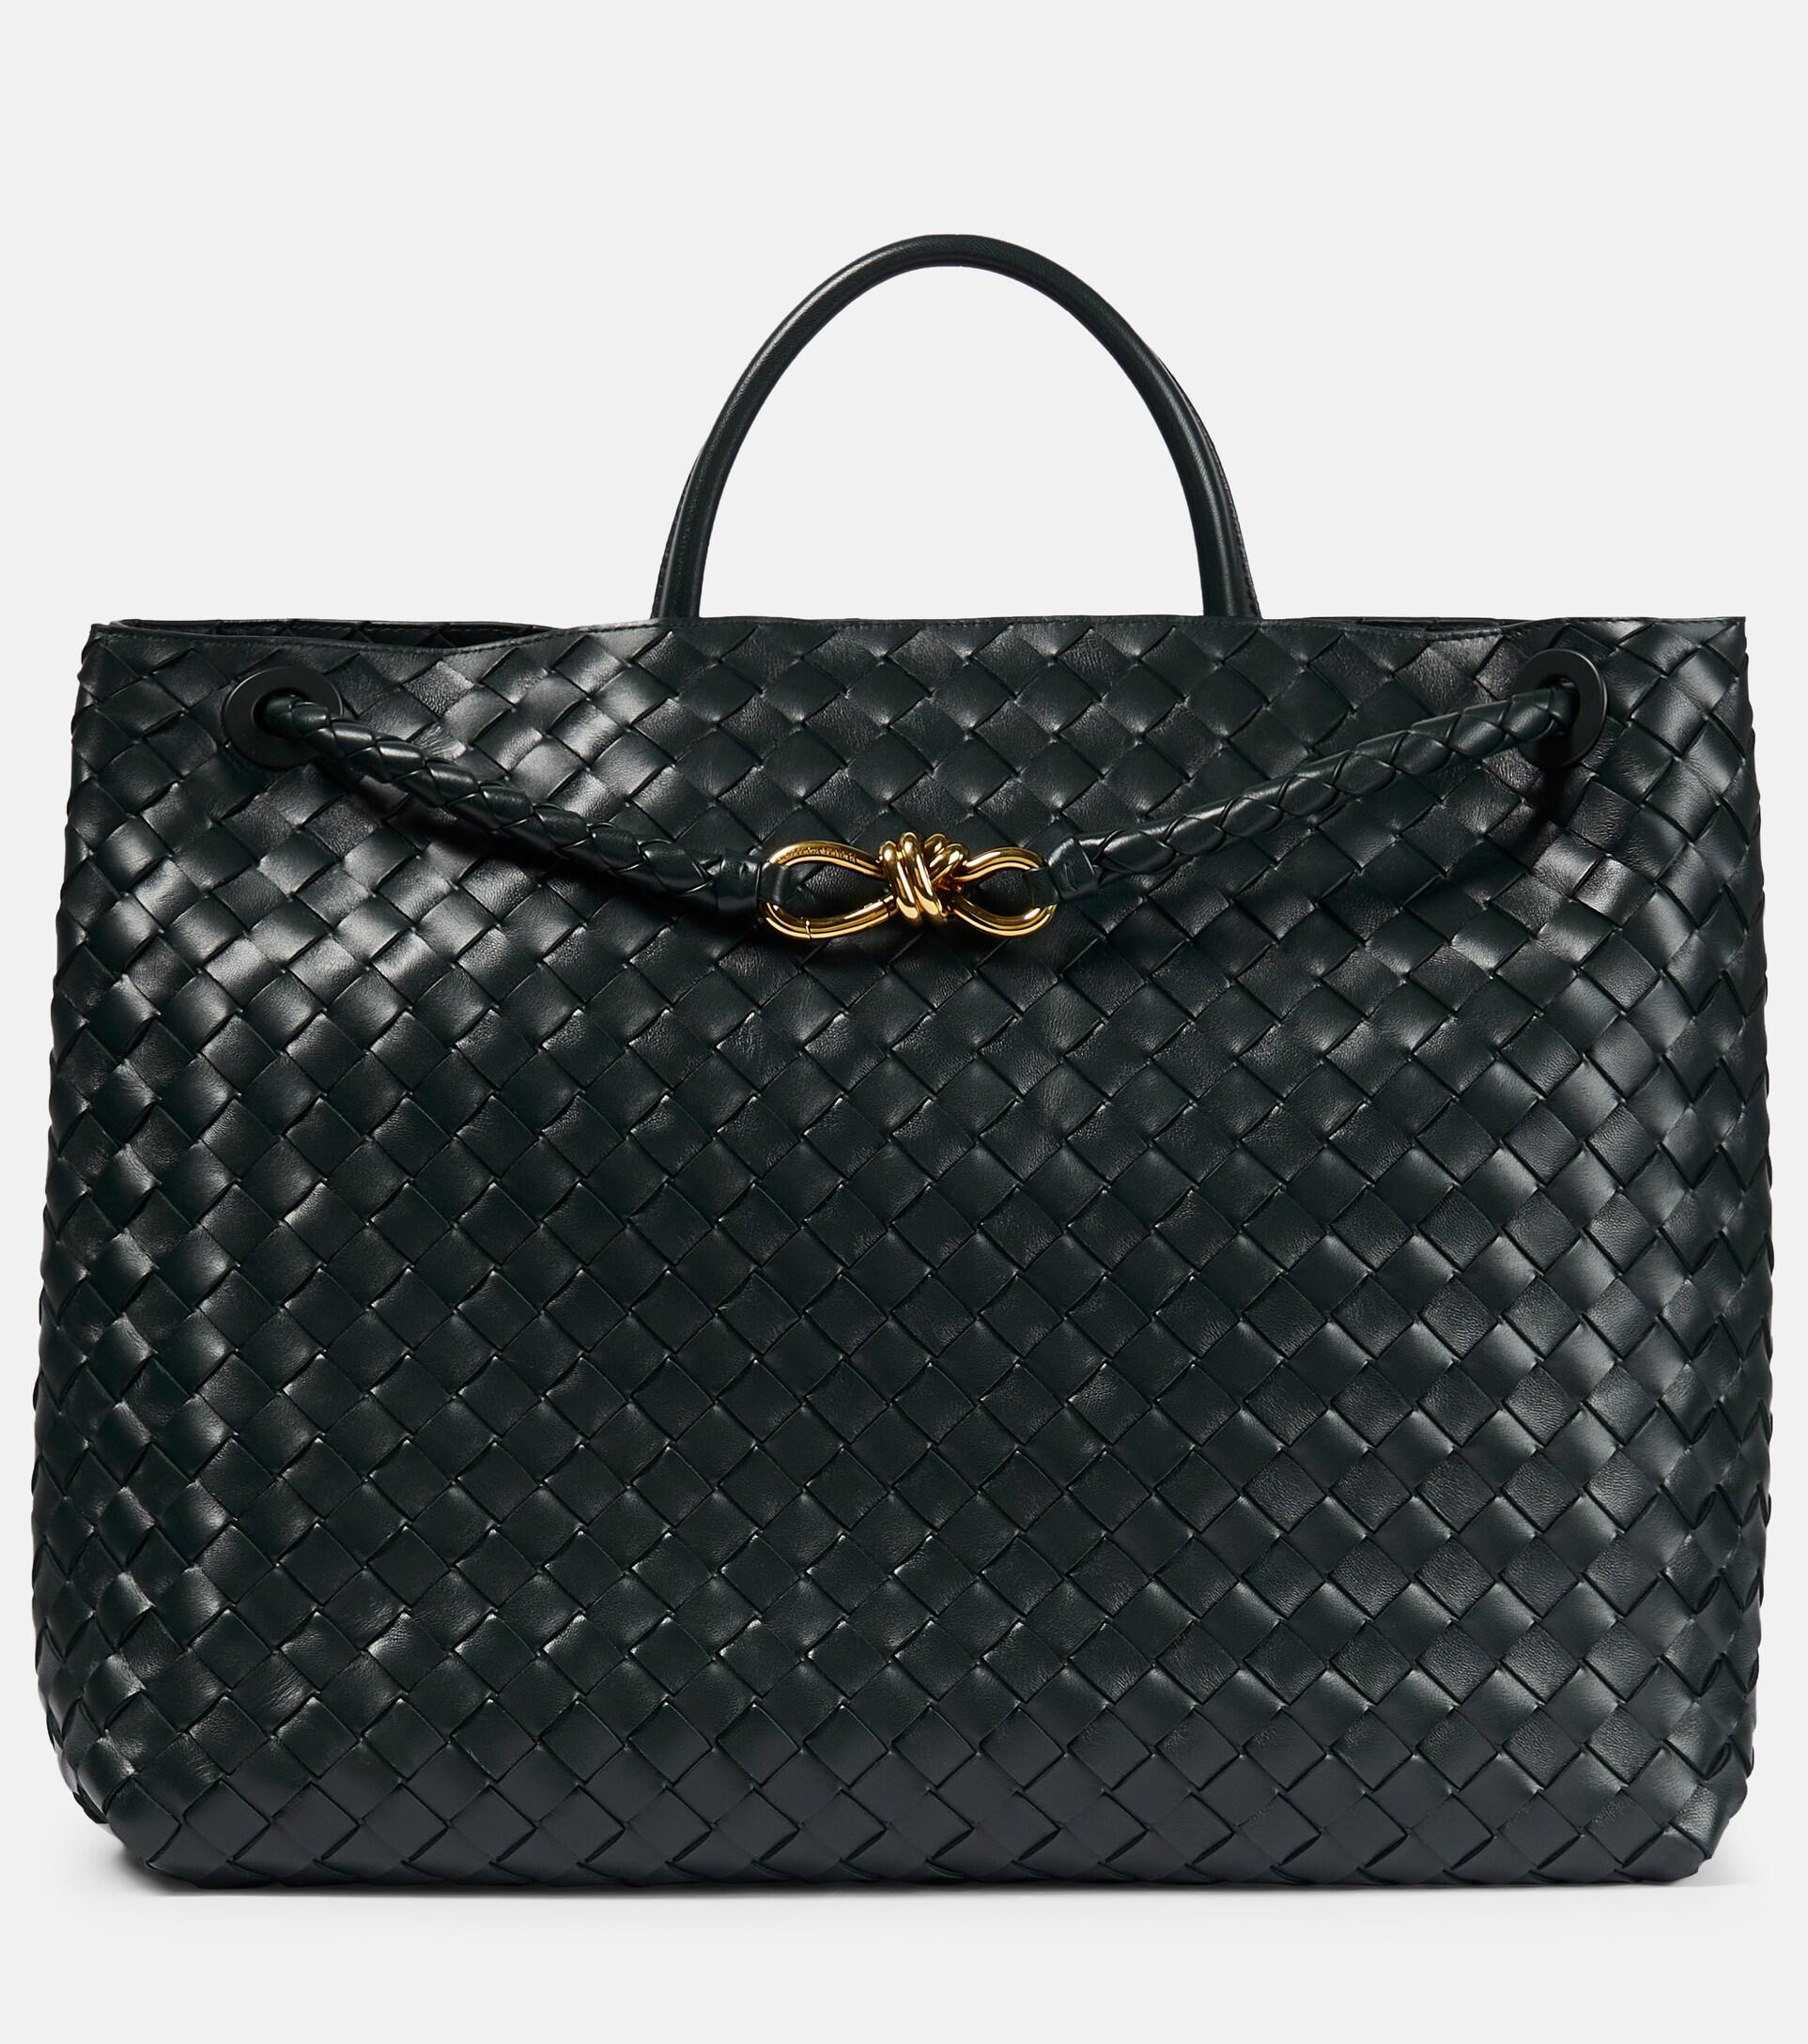 Bottega Veneta Andiamo Large Leather Tote Bag in Black | Lyst